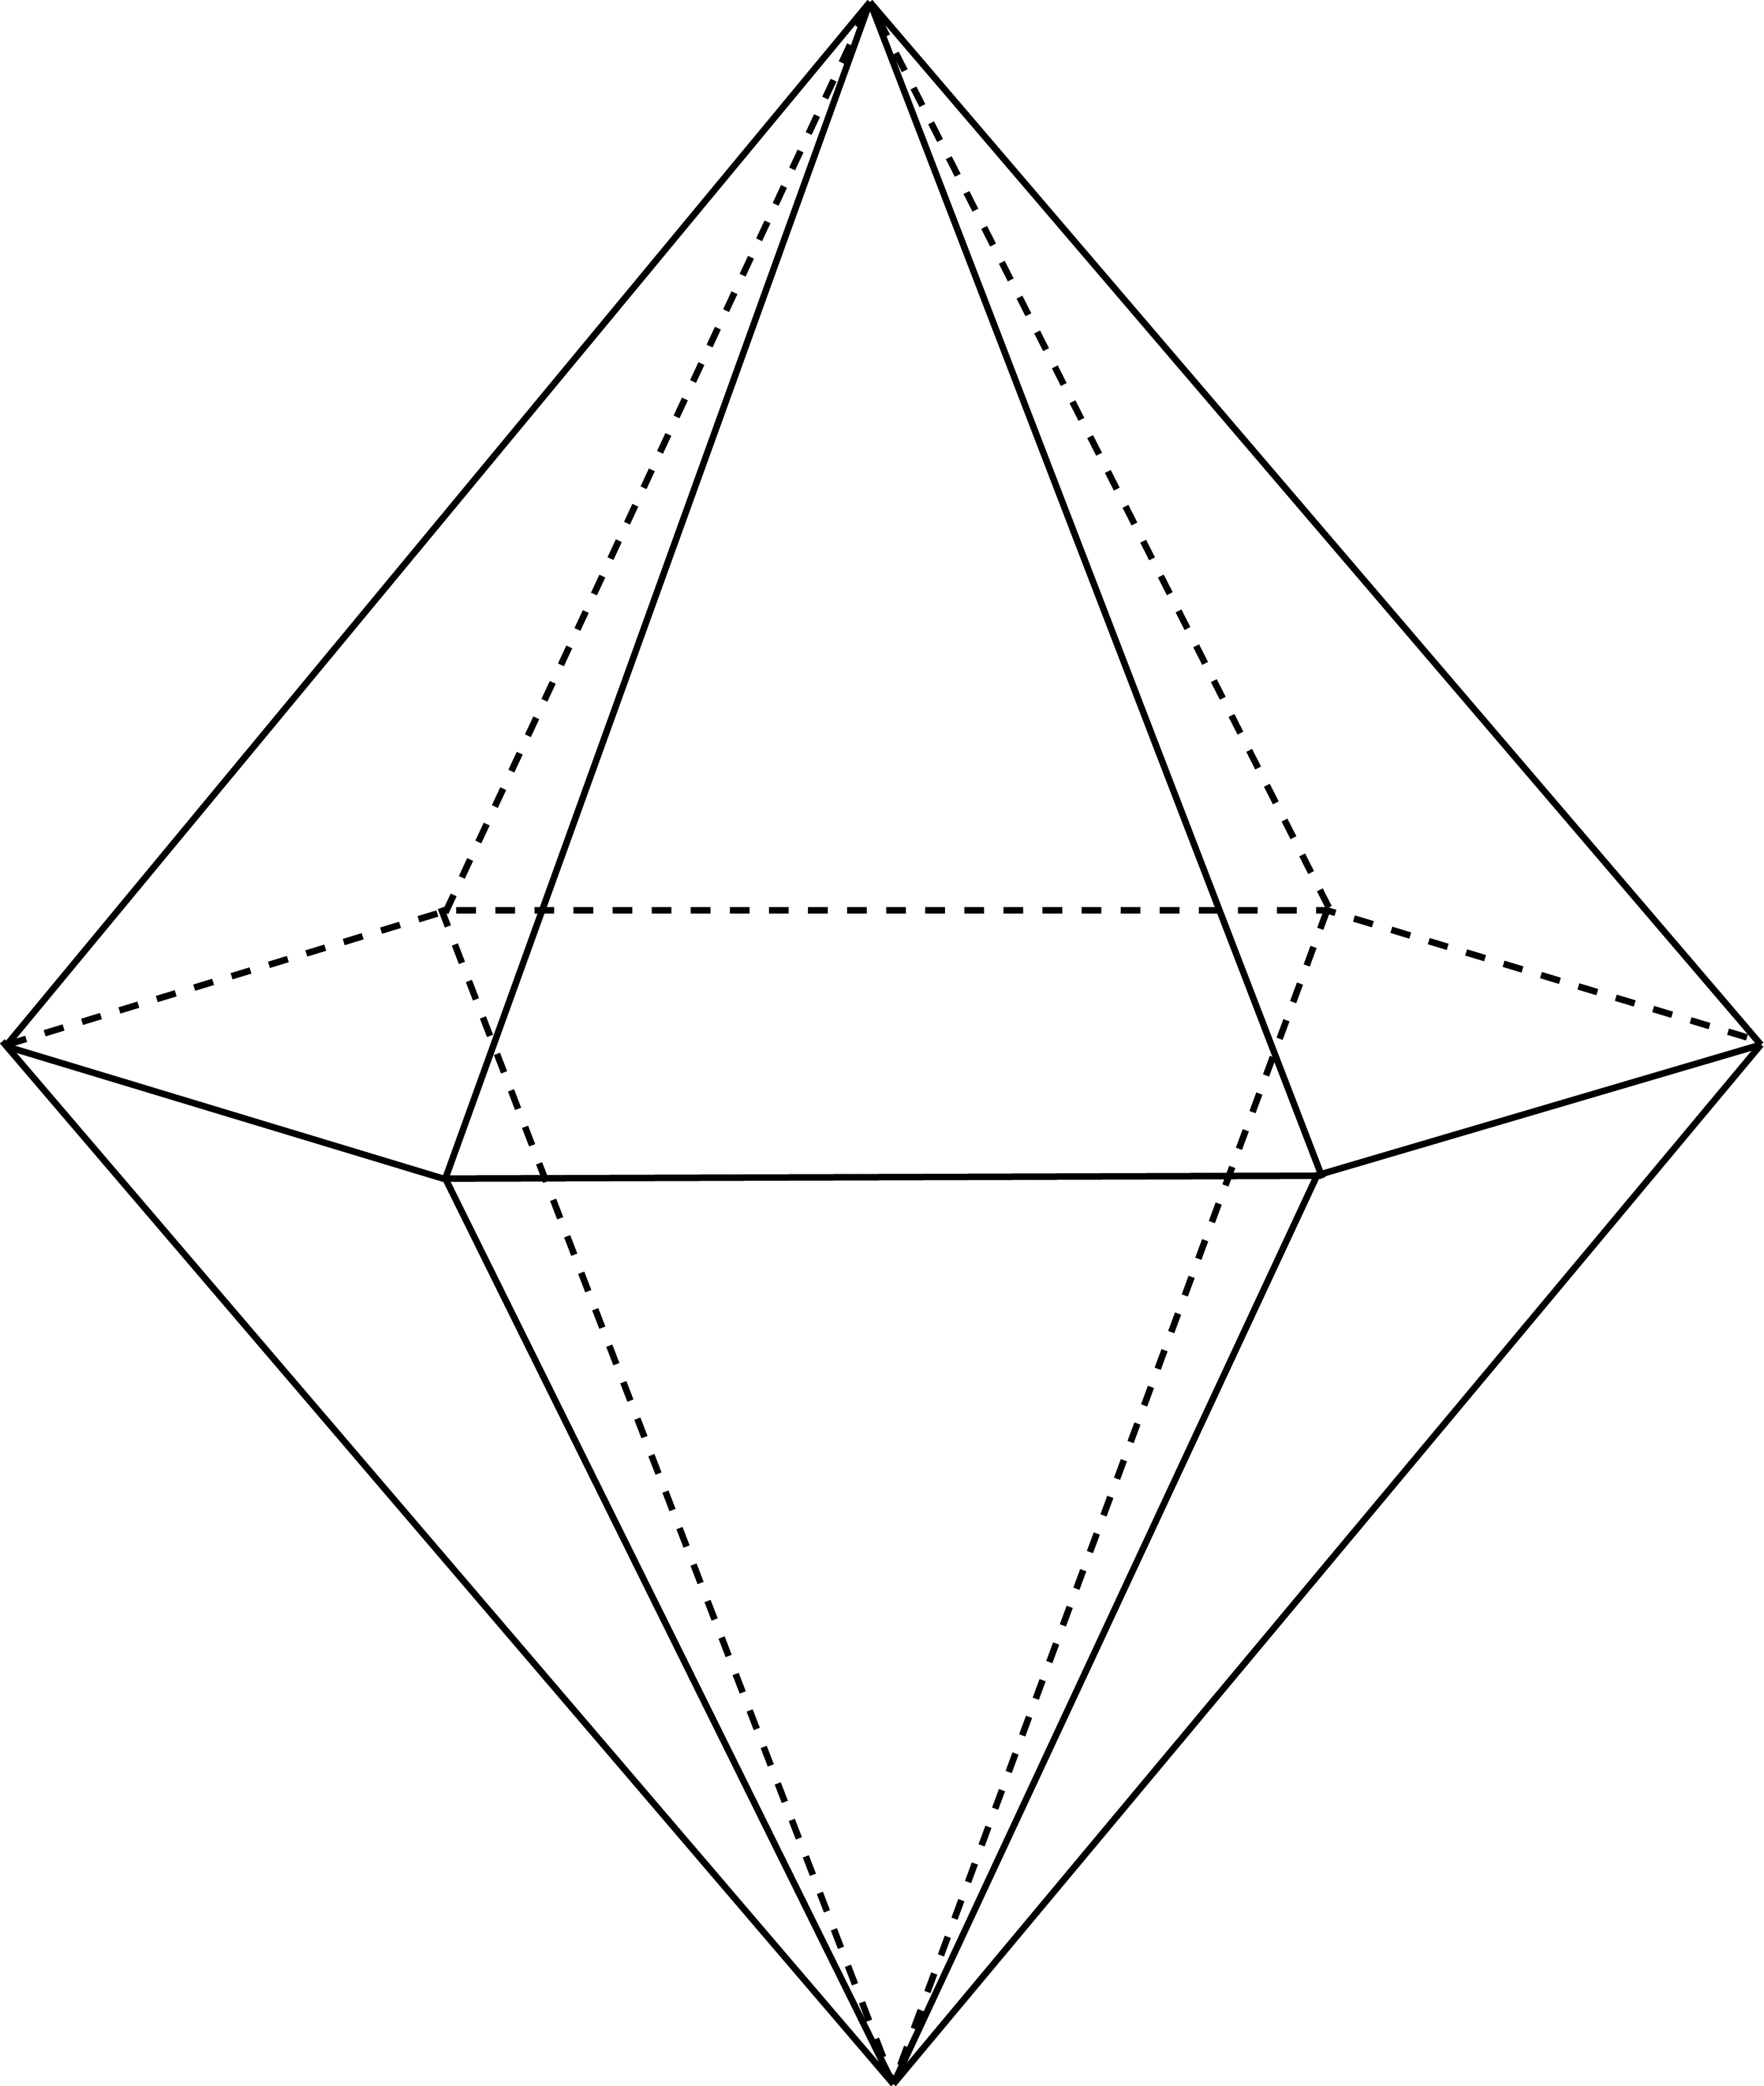 Октаэдр пирамида. Тригональный трапецоэдр. Пятиугольная бипирамида. Многогранник октаэдр. Гексагональная дипирадмида.